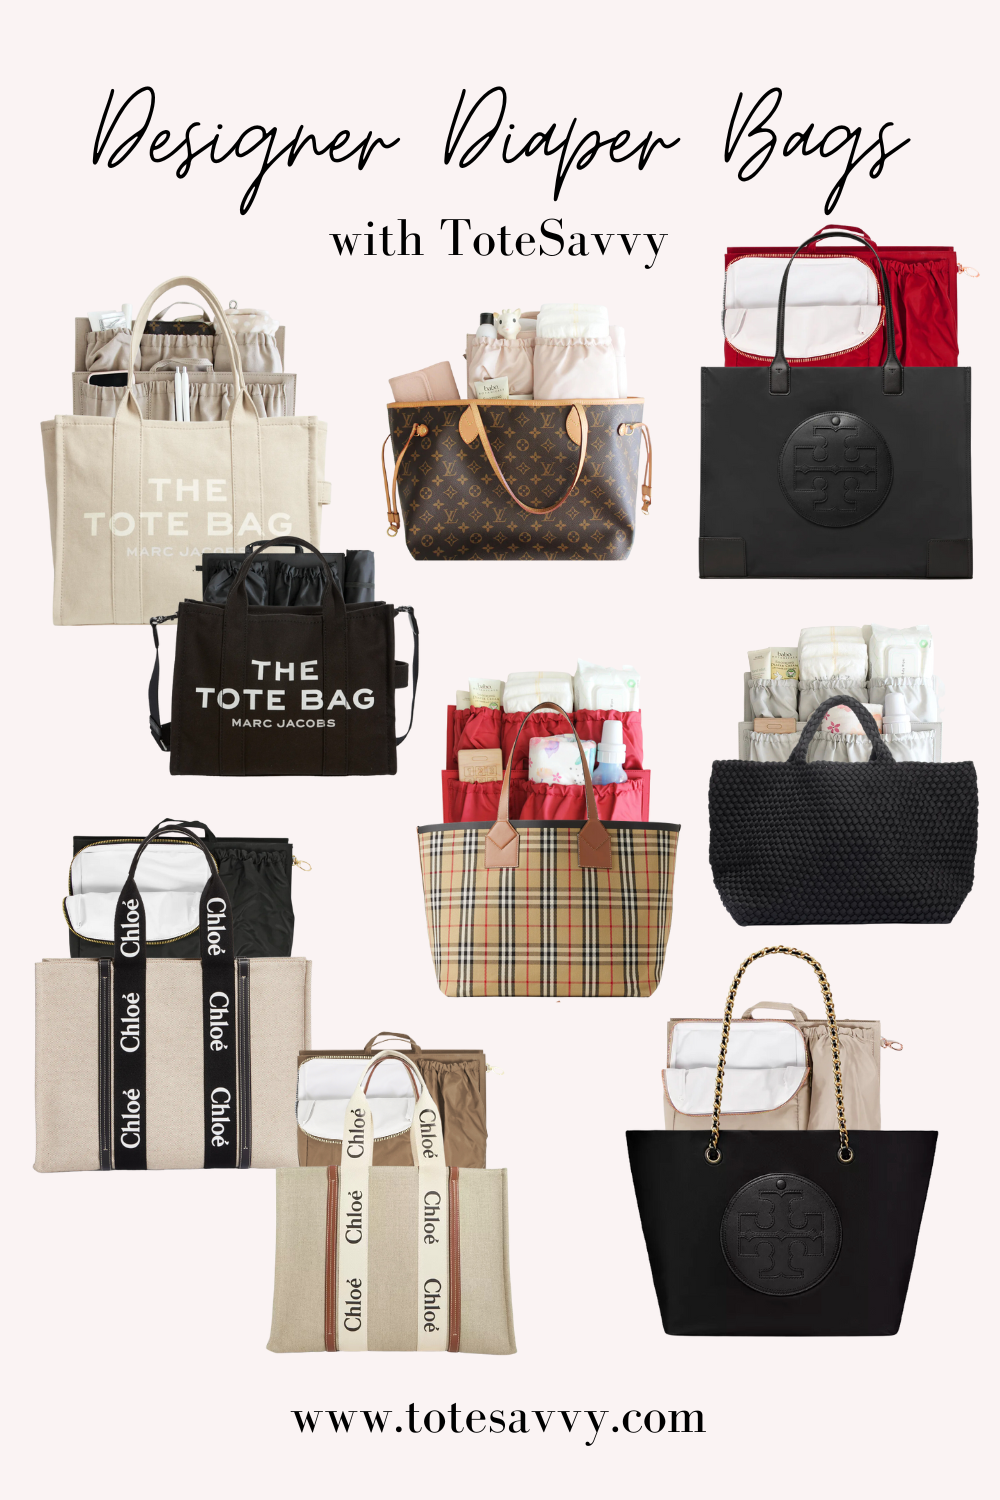 Luxury Designer Bag Organizer, Luxury Handbag Organizer Bag